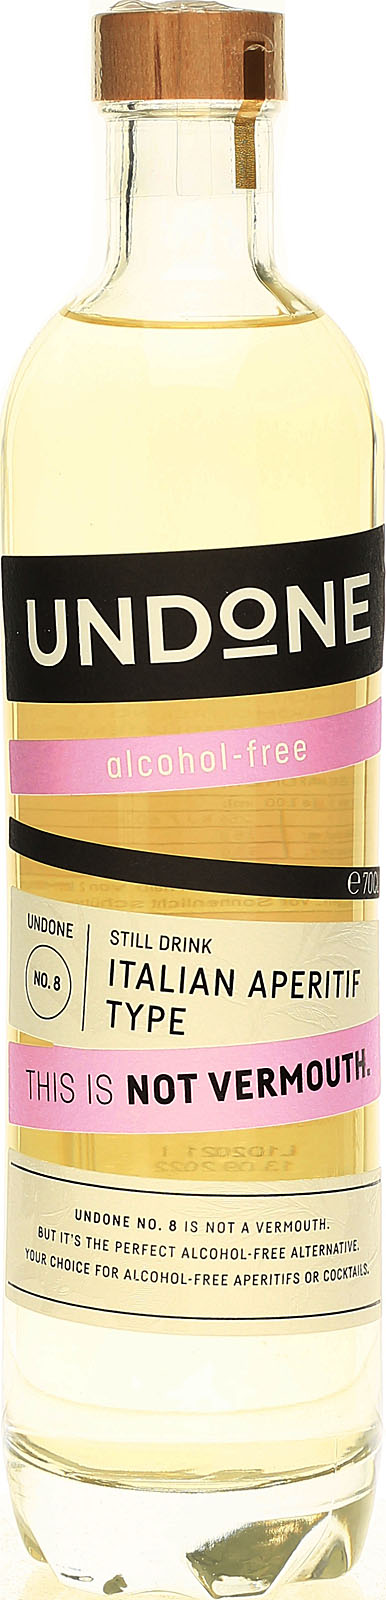 Undone No. 8 Italian Aperitiv Type - Bei uns im Shop